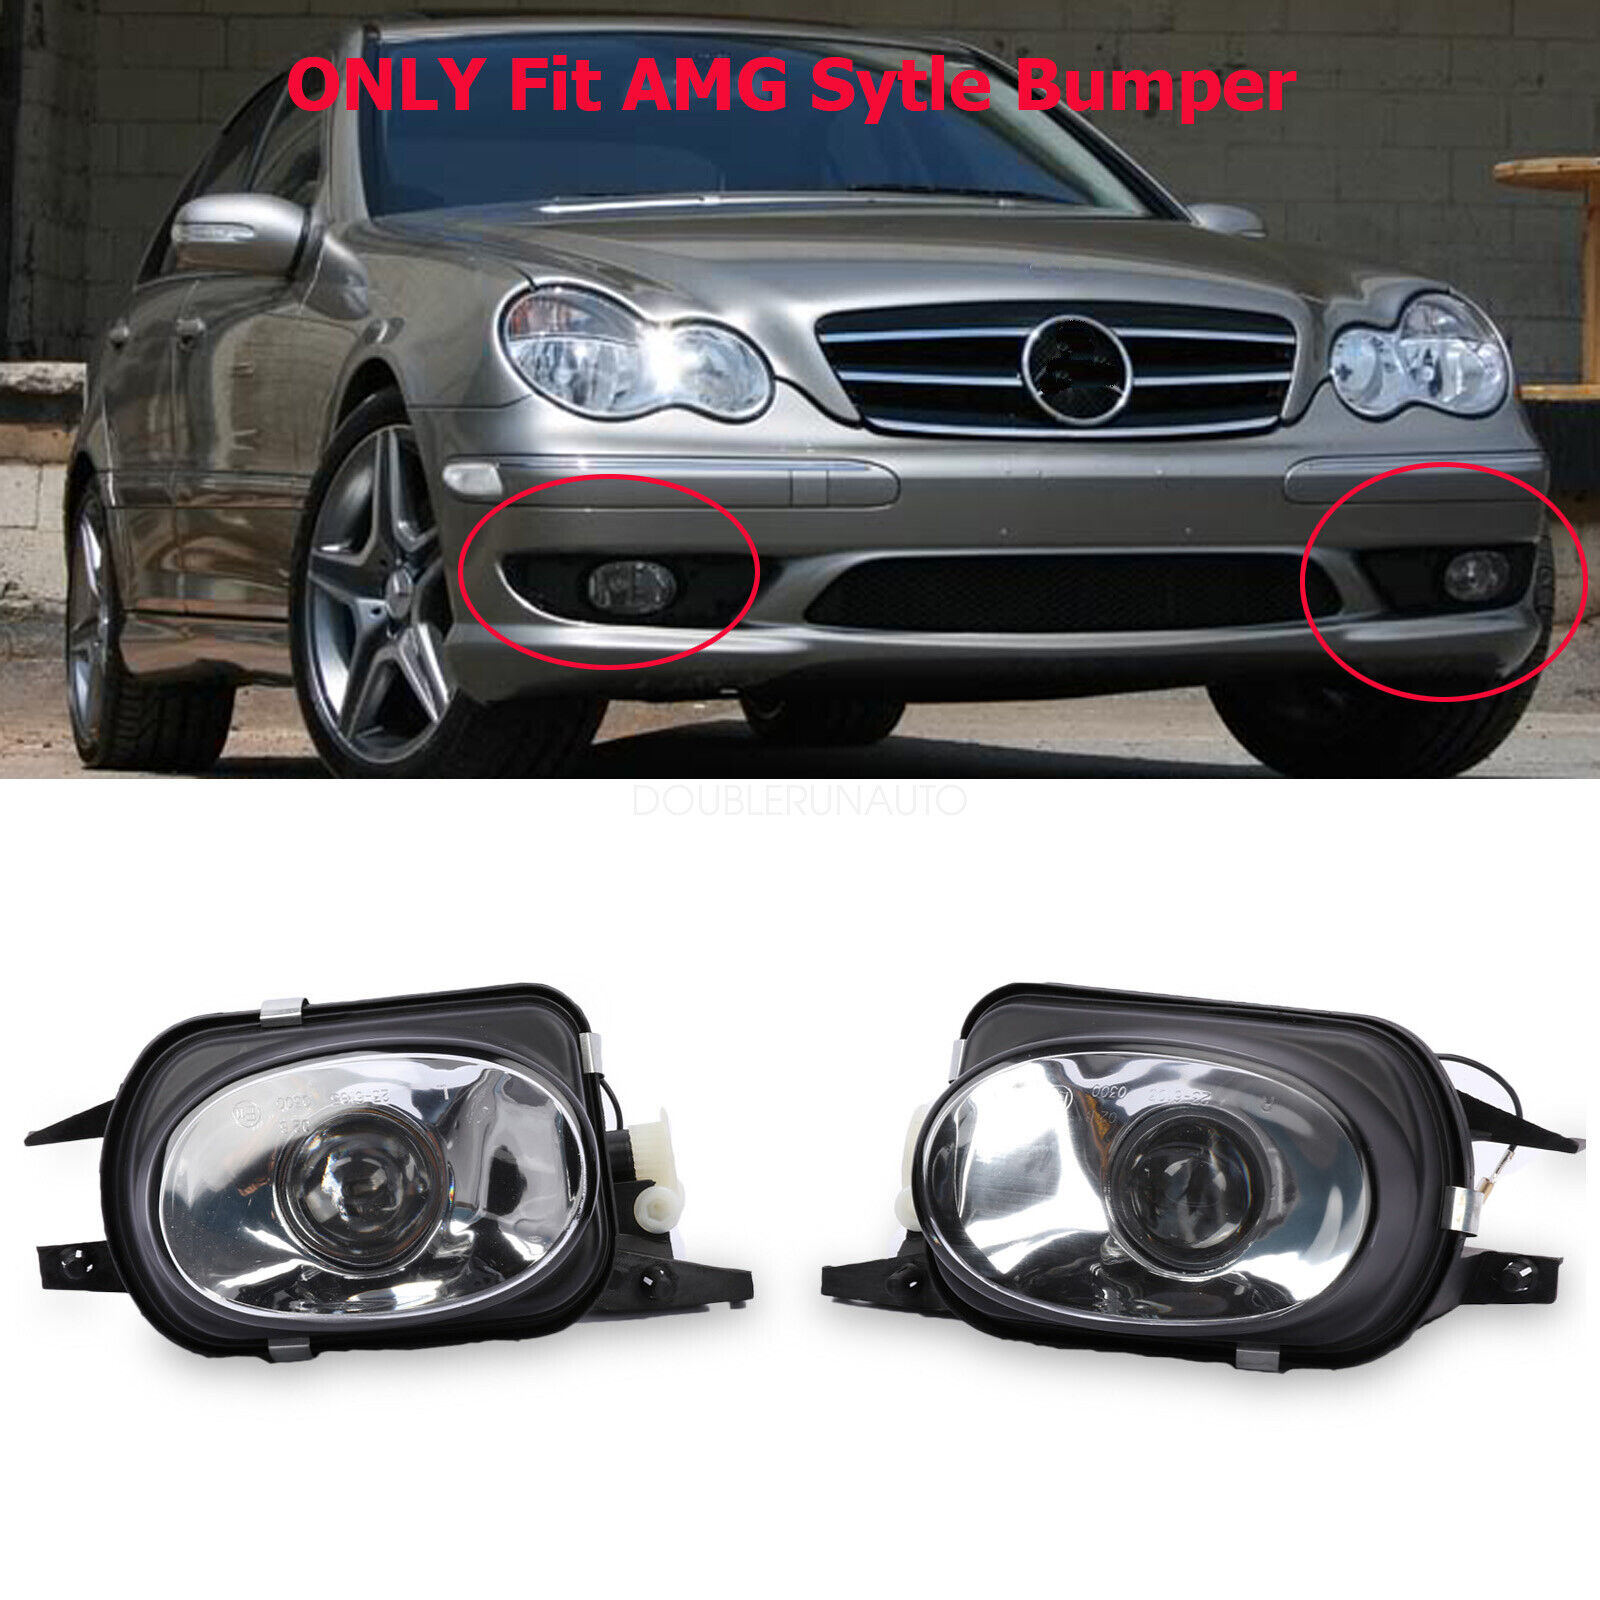 AMG Style Bumper Clear Fog Lights For Mercedes Benz W203 C32 C55 AMG